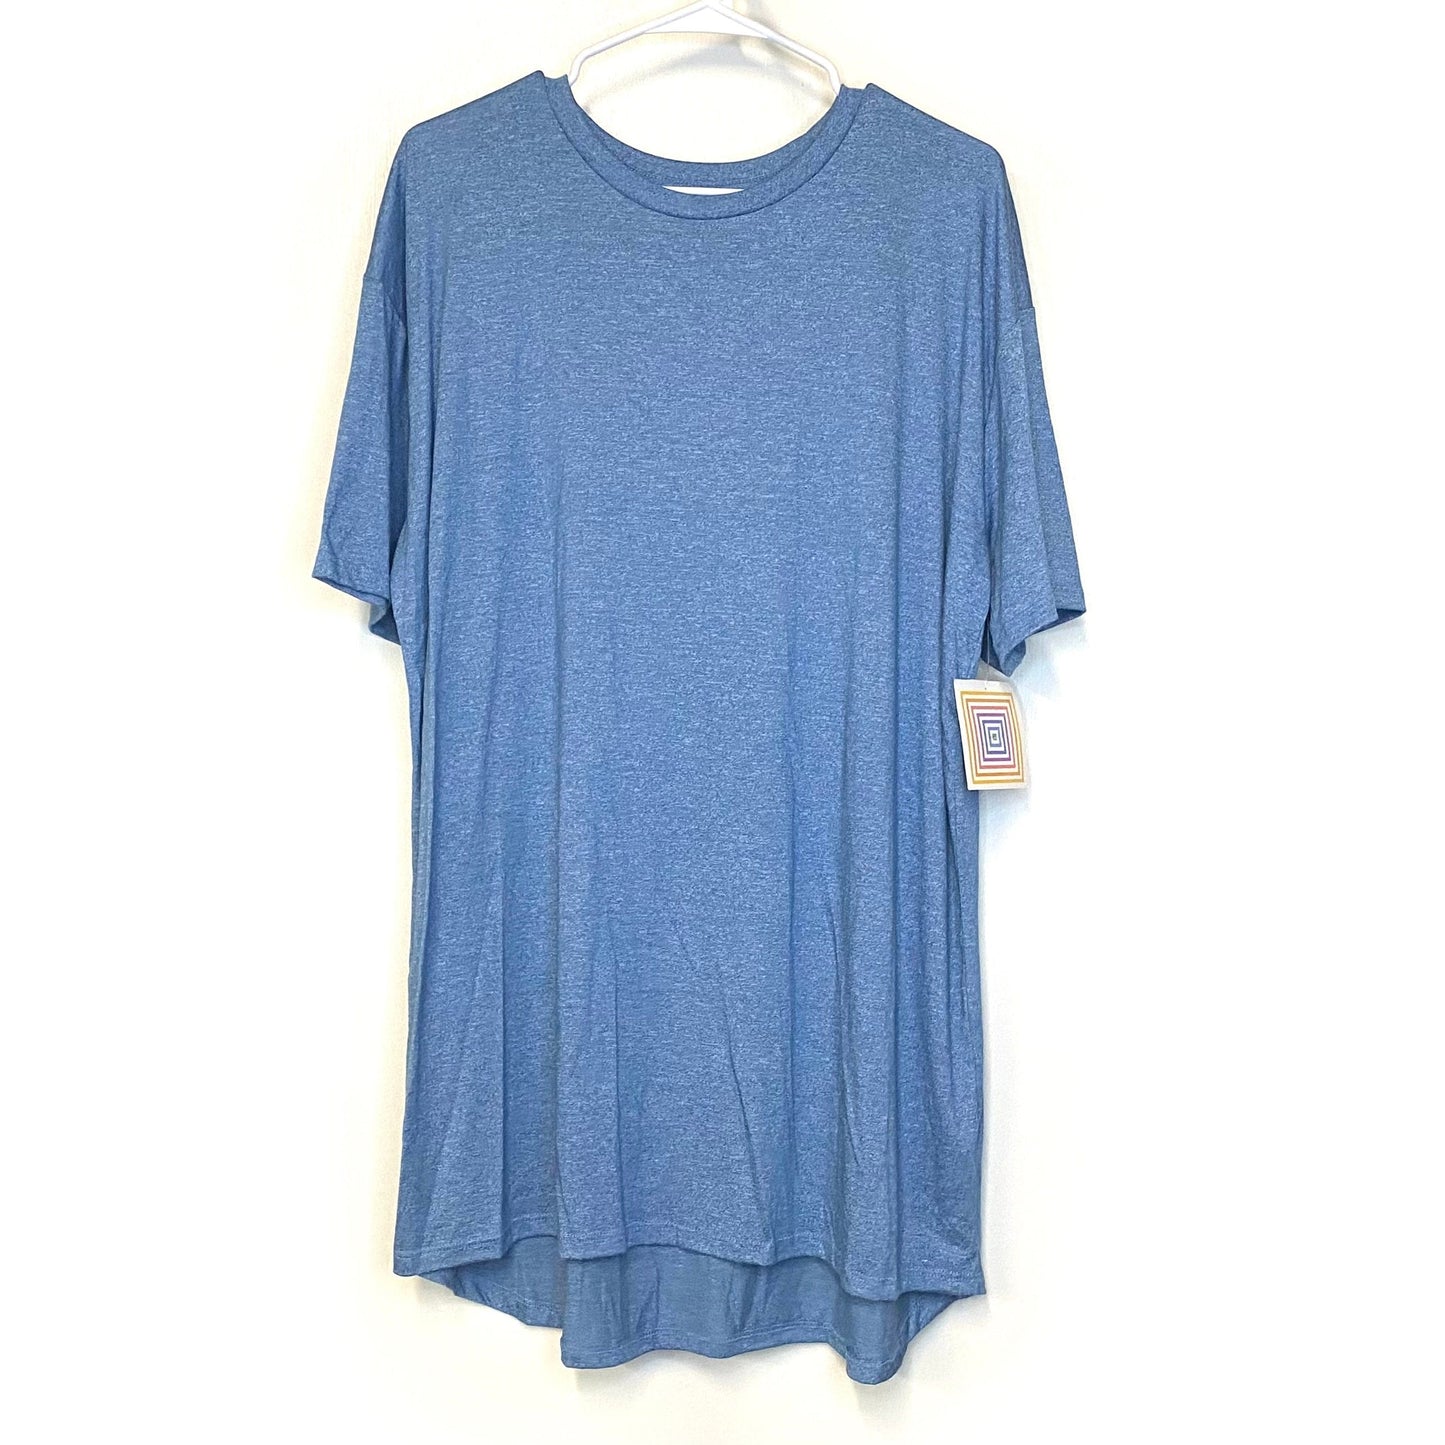 LuLaRoe Unisex Size 2XL Blue Patrick T Heather T-Shirt Shirt S/s NWT